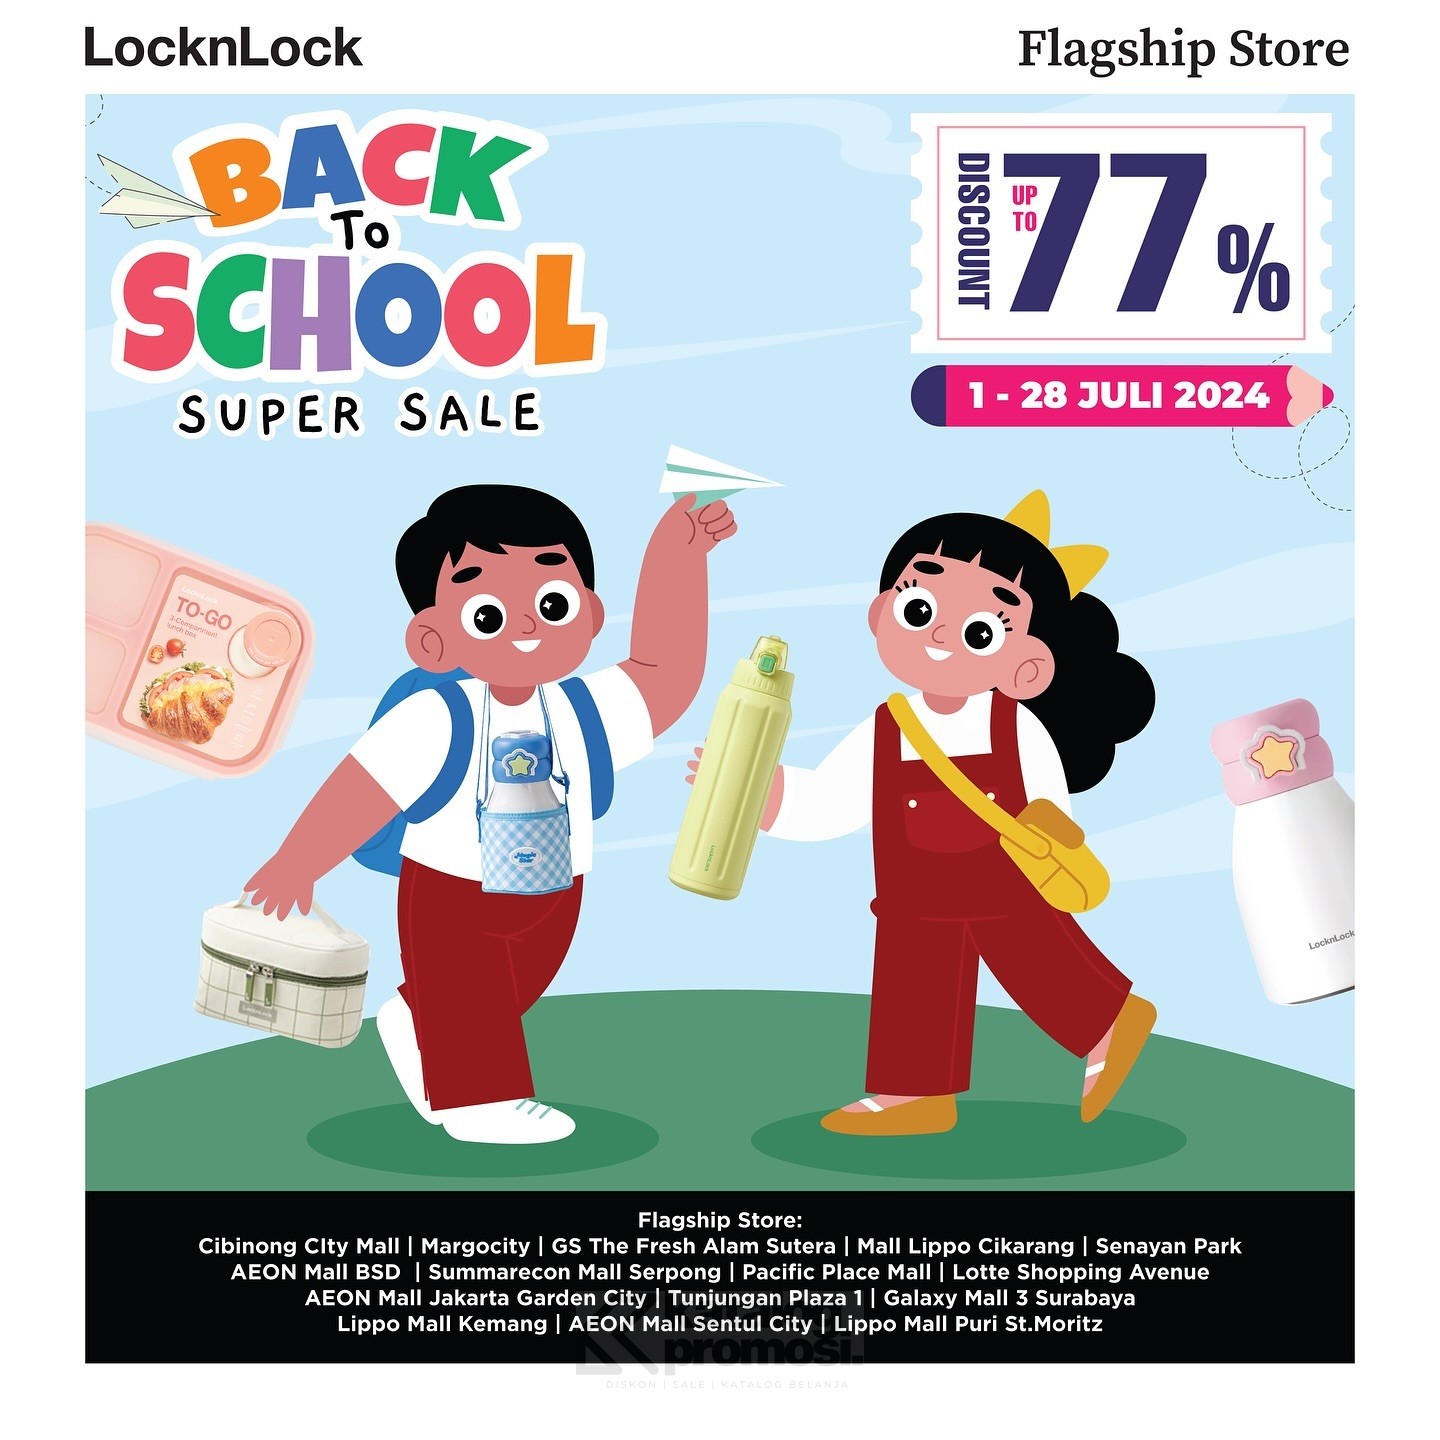 Promo LocknLock Store Back to School Super Sale up to 77% berlaku tanggal 01-28 Juli 2024